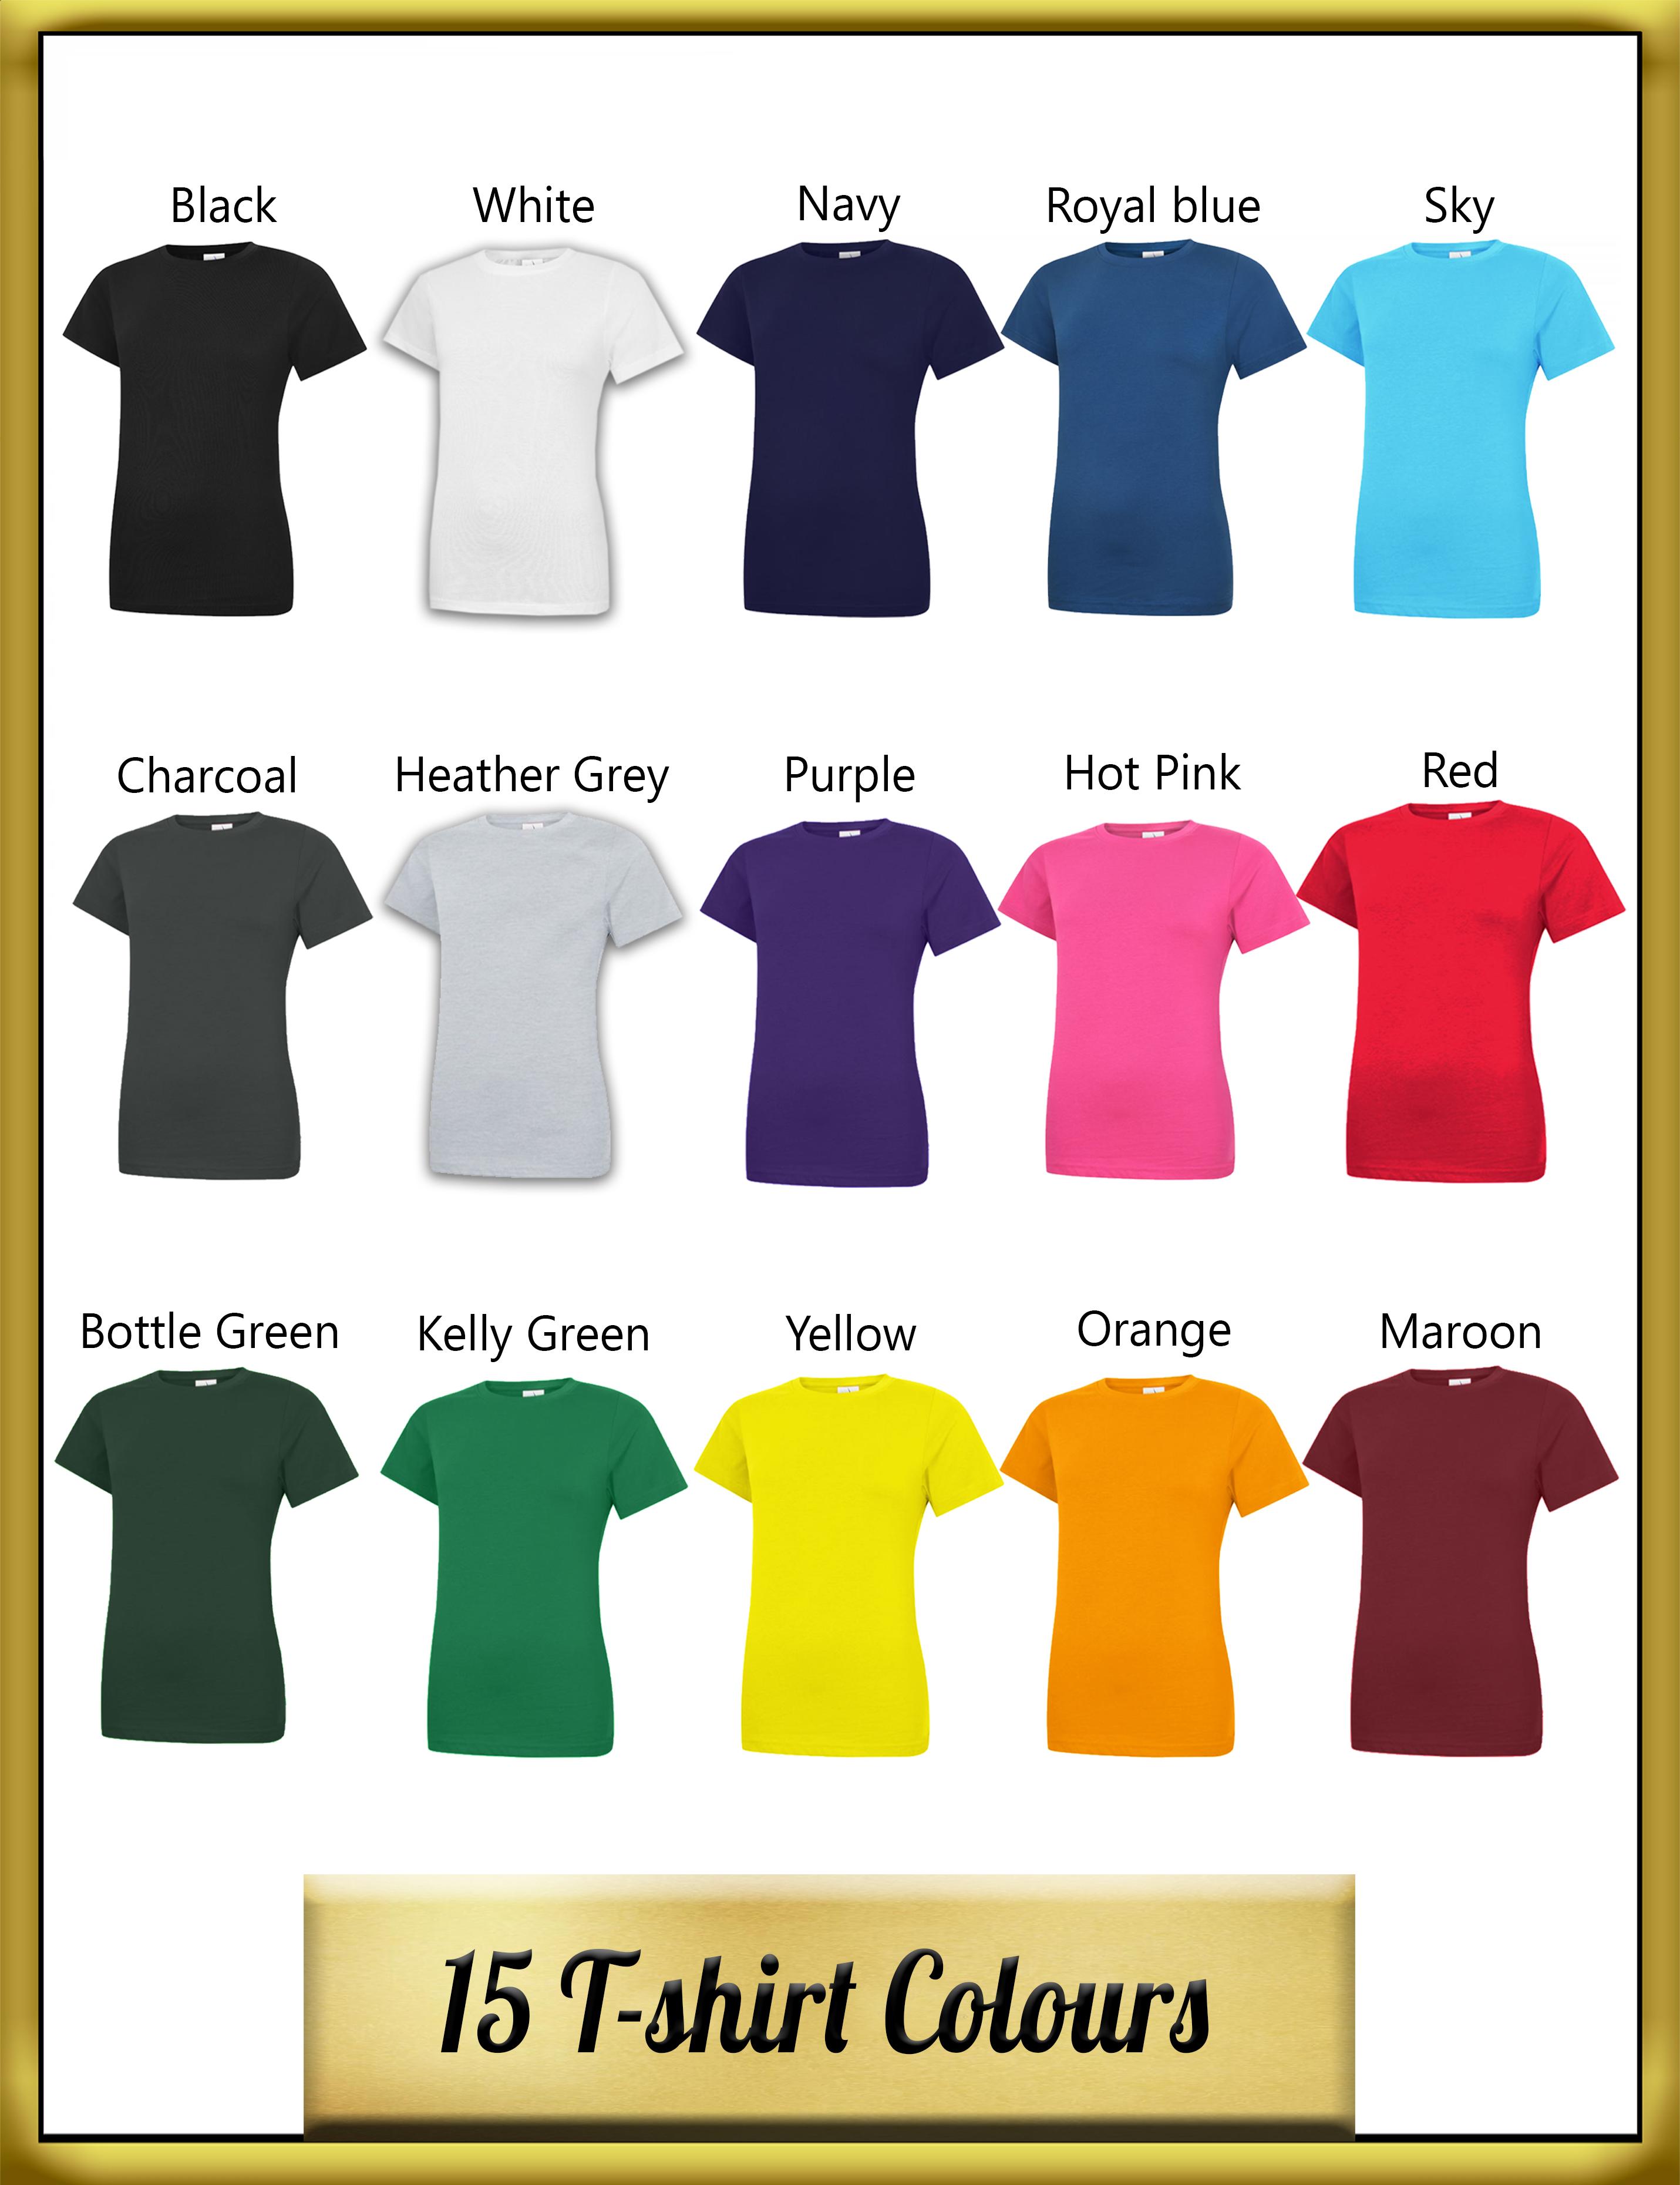 Full Colour Printed Women's T-shirt colours